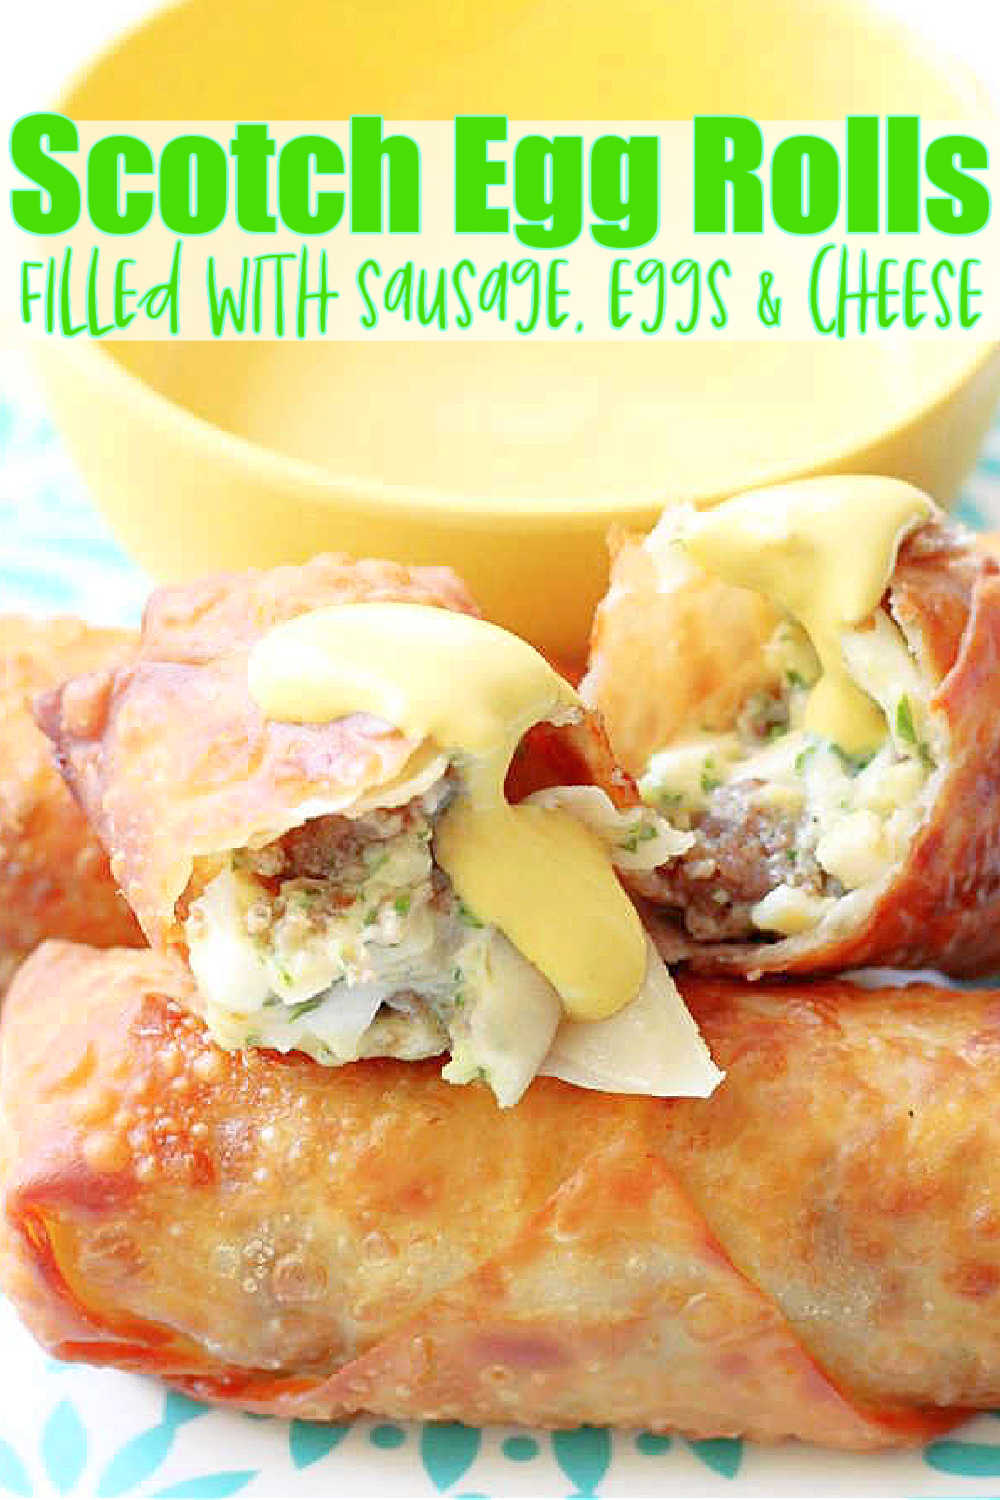 Scotch Egg Rolls | Foodtastic Mom #scotcheggrolls #eggrolls #stpatricksday via @foodtasticmom